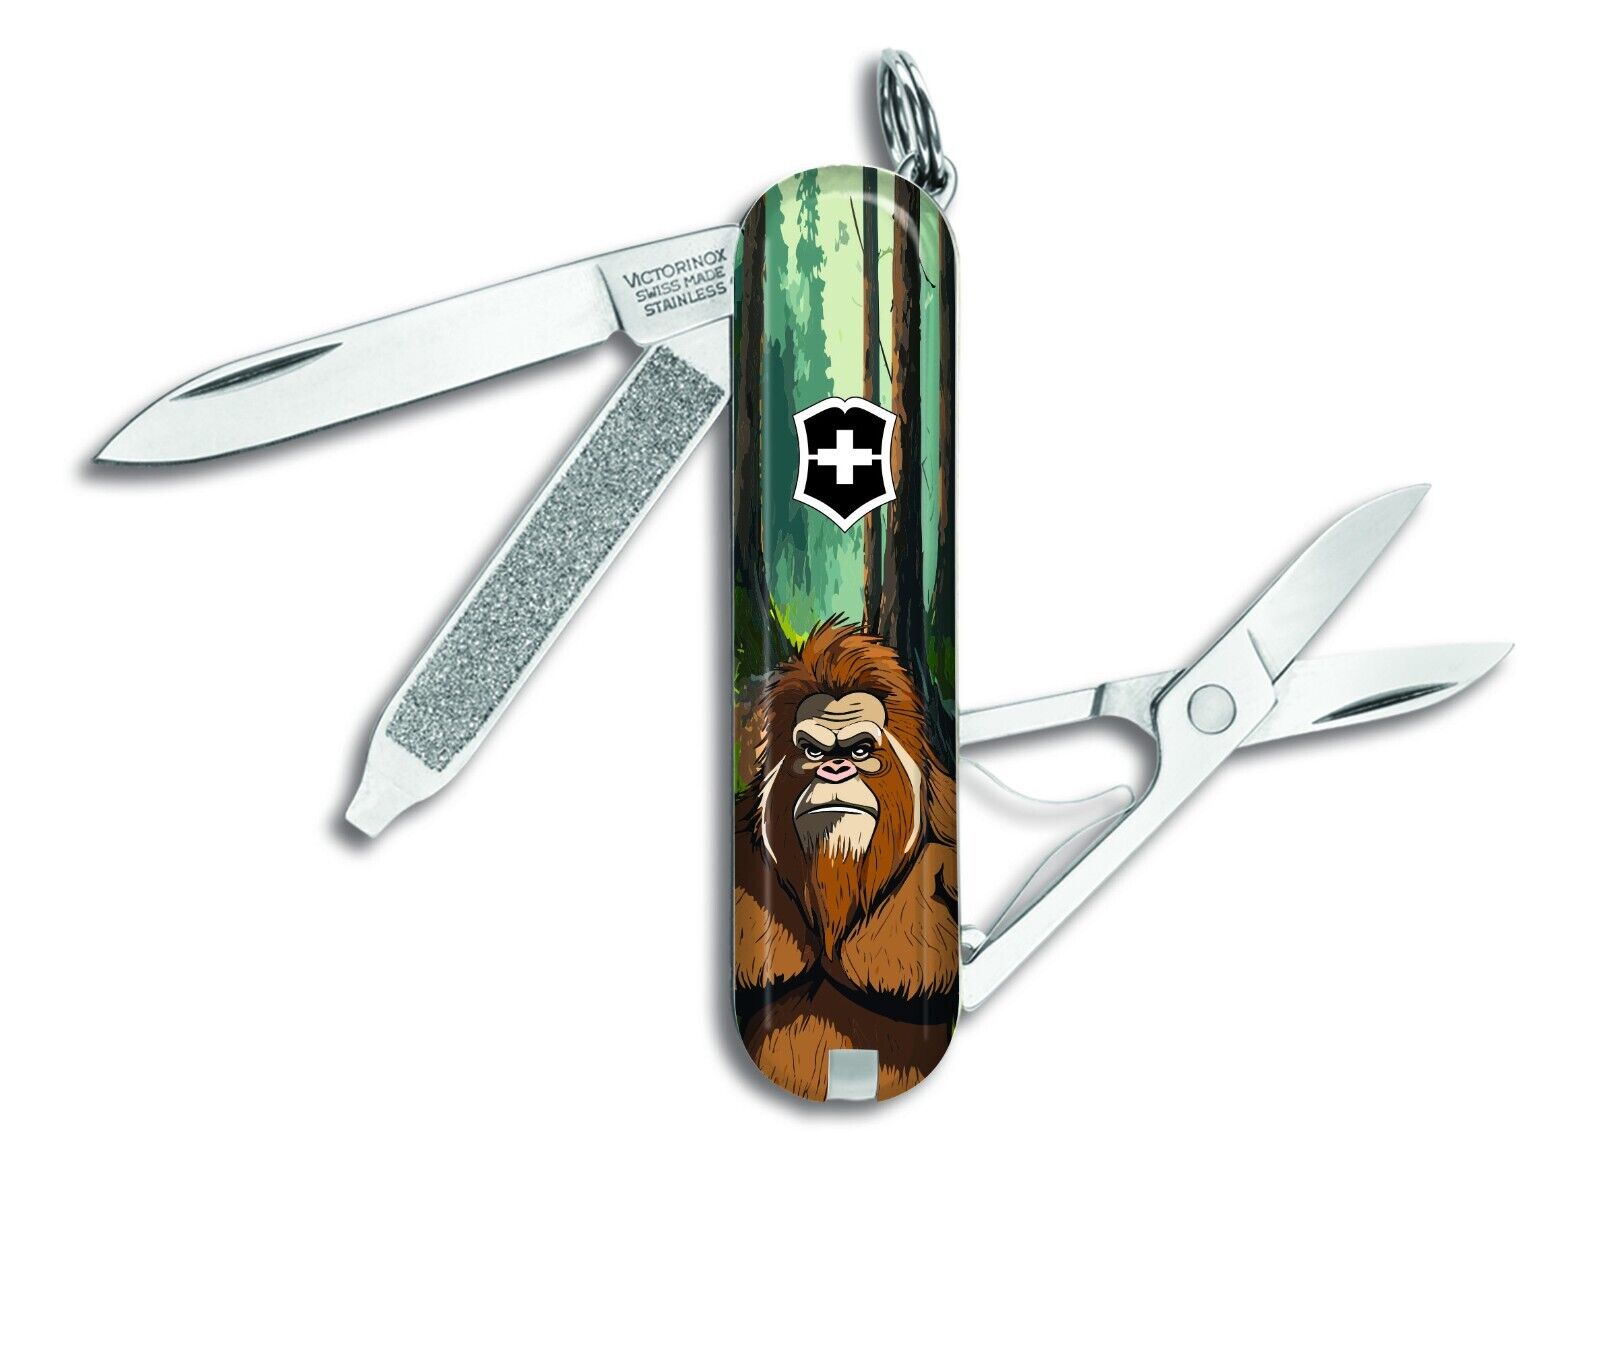 VICTORINOX SWISS ARMY KNIVES BIGFOOT WILDERNESS SASQUATCH CLASSIC SD KNIFE